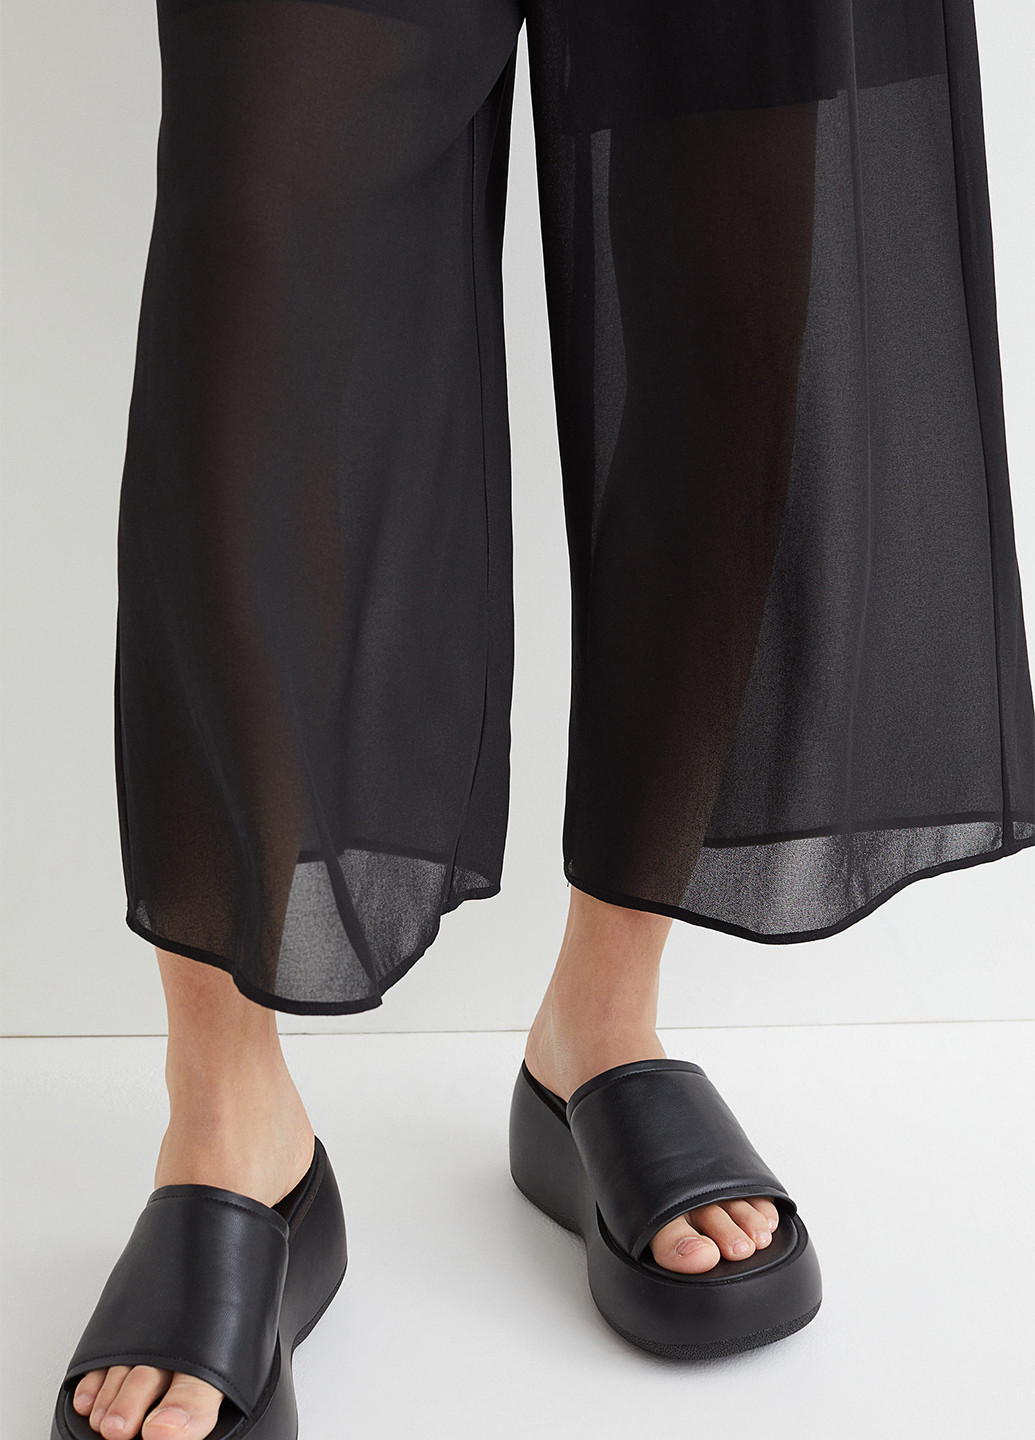 Комбинезон H&M комбинезон-брюки однотонный чёрный кэжуал полиэстер, шифон